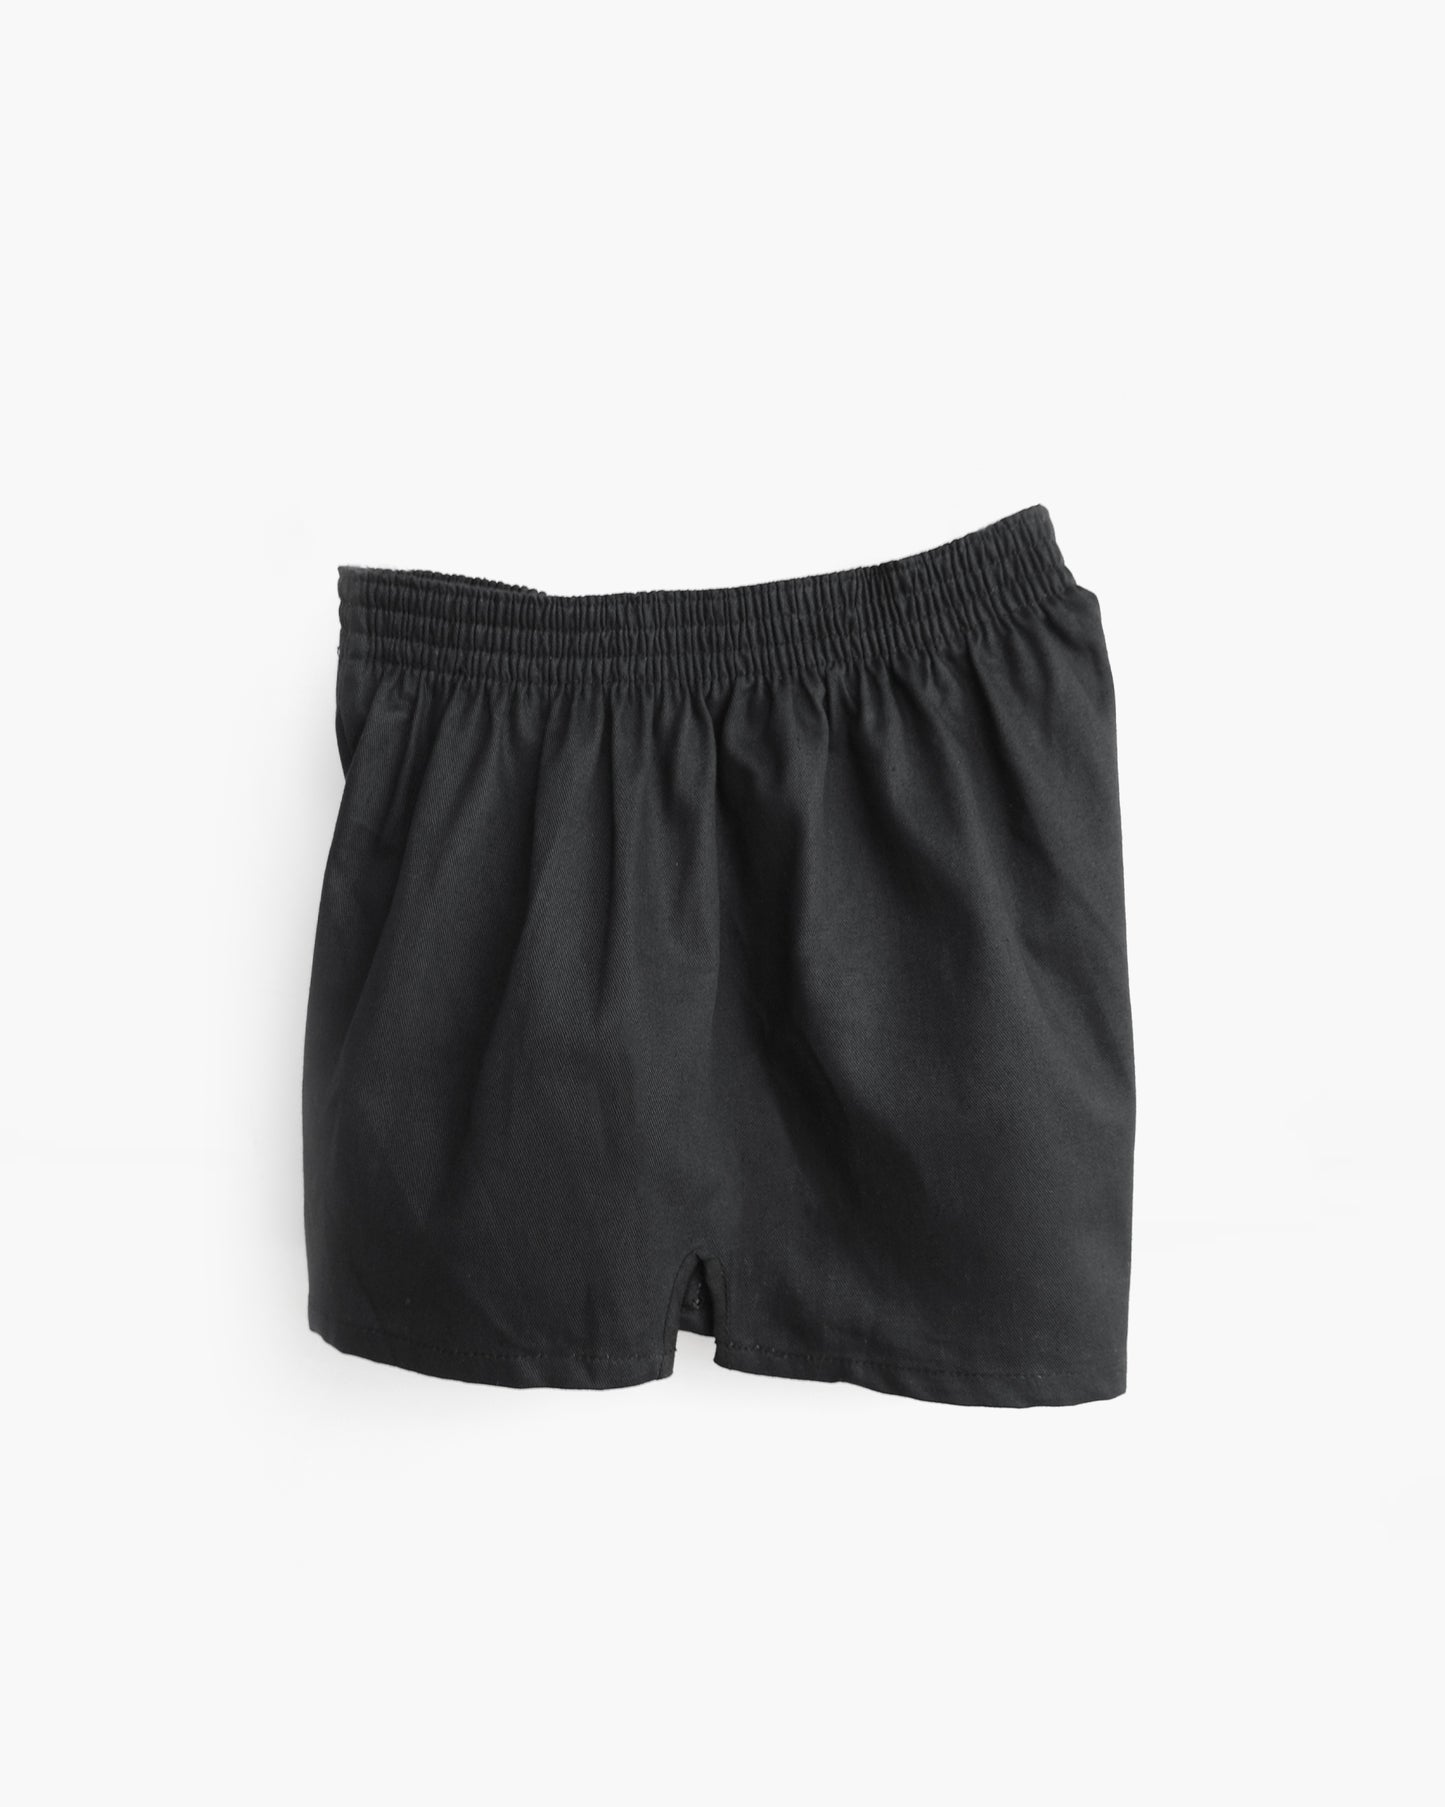 Black Gym Shorts Made in Netherland